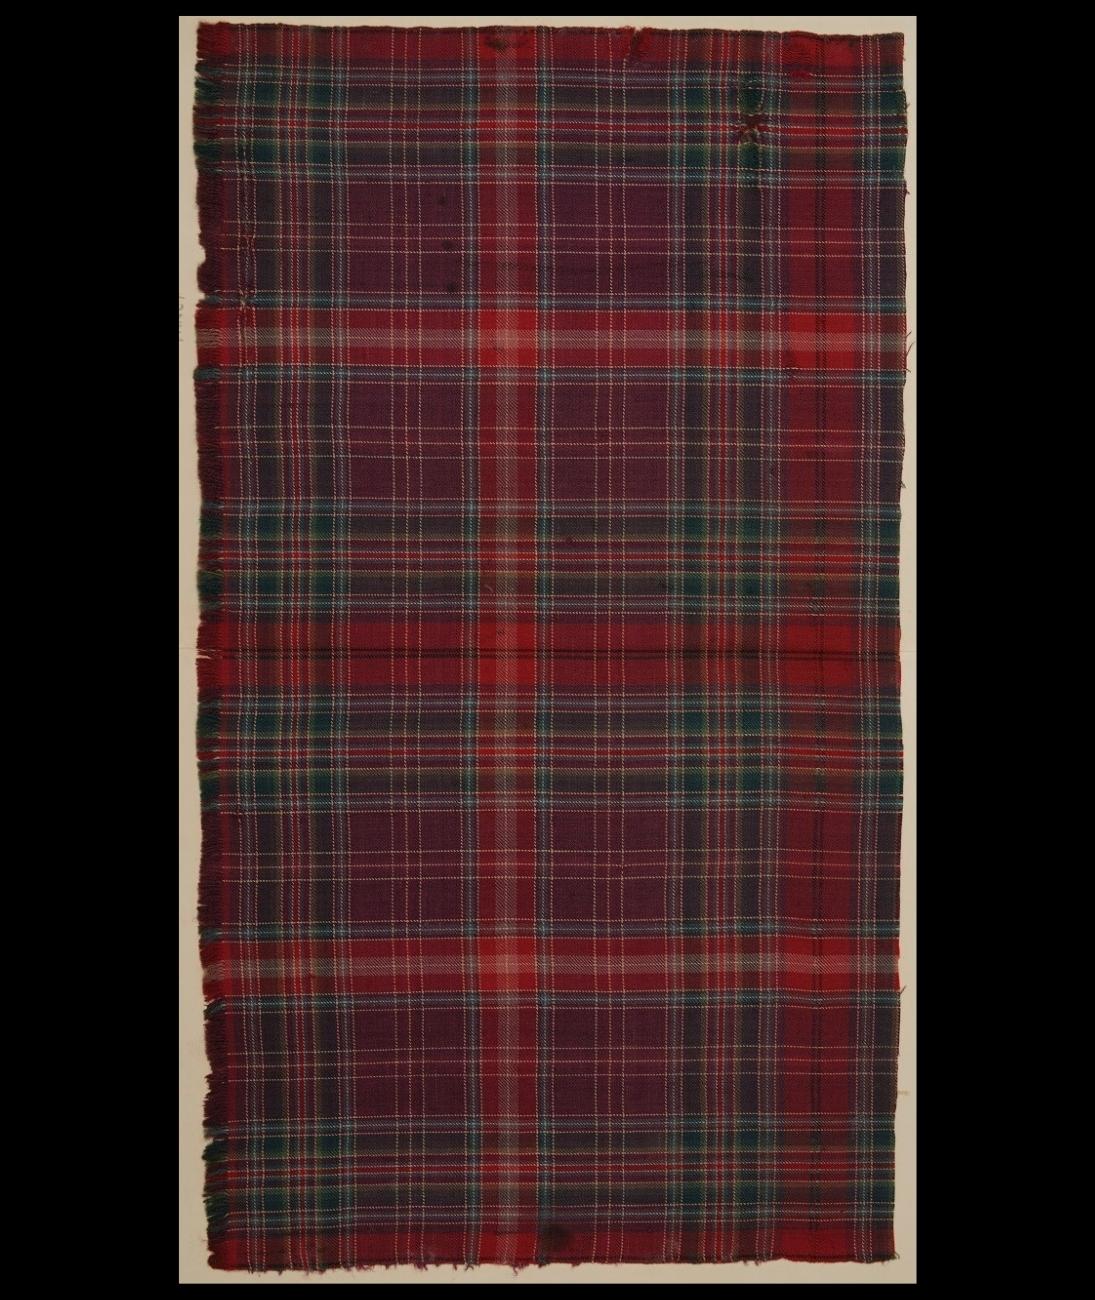 Tall rectangular swatch of burgundy, dark blue, red and light green tartan fabric against a black background.